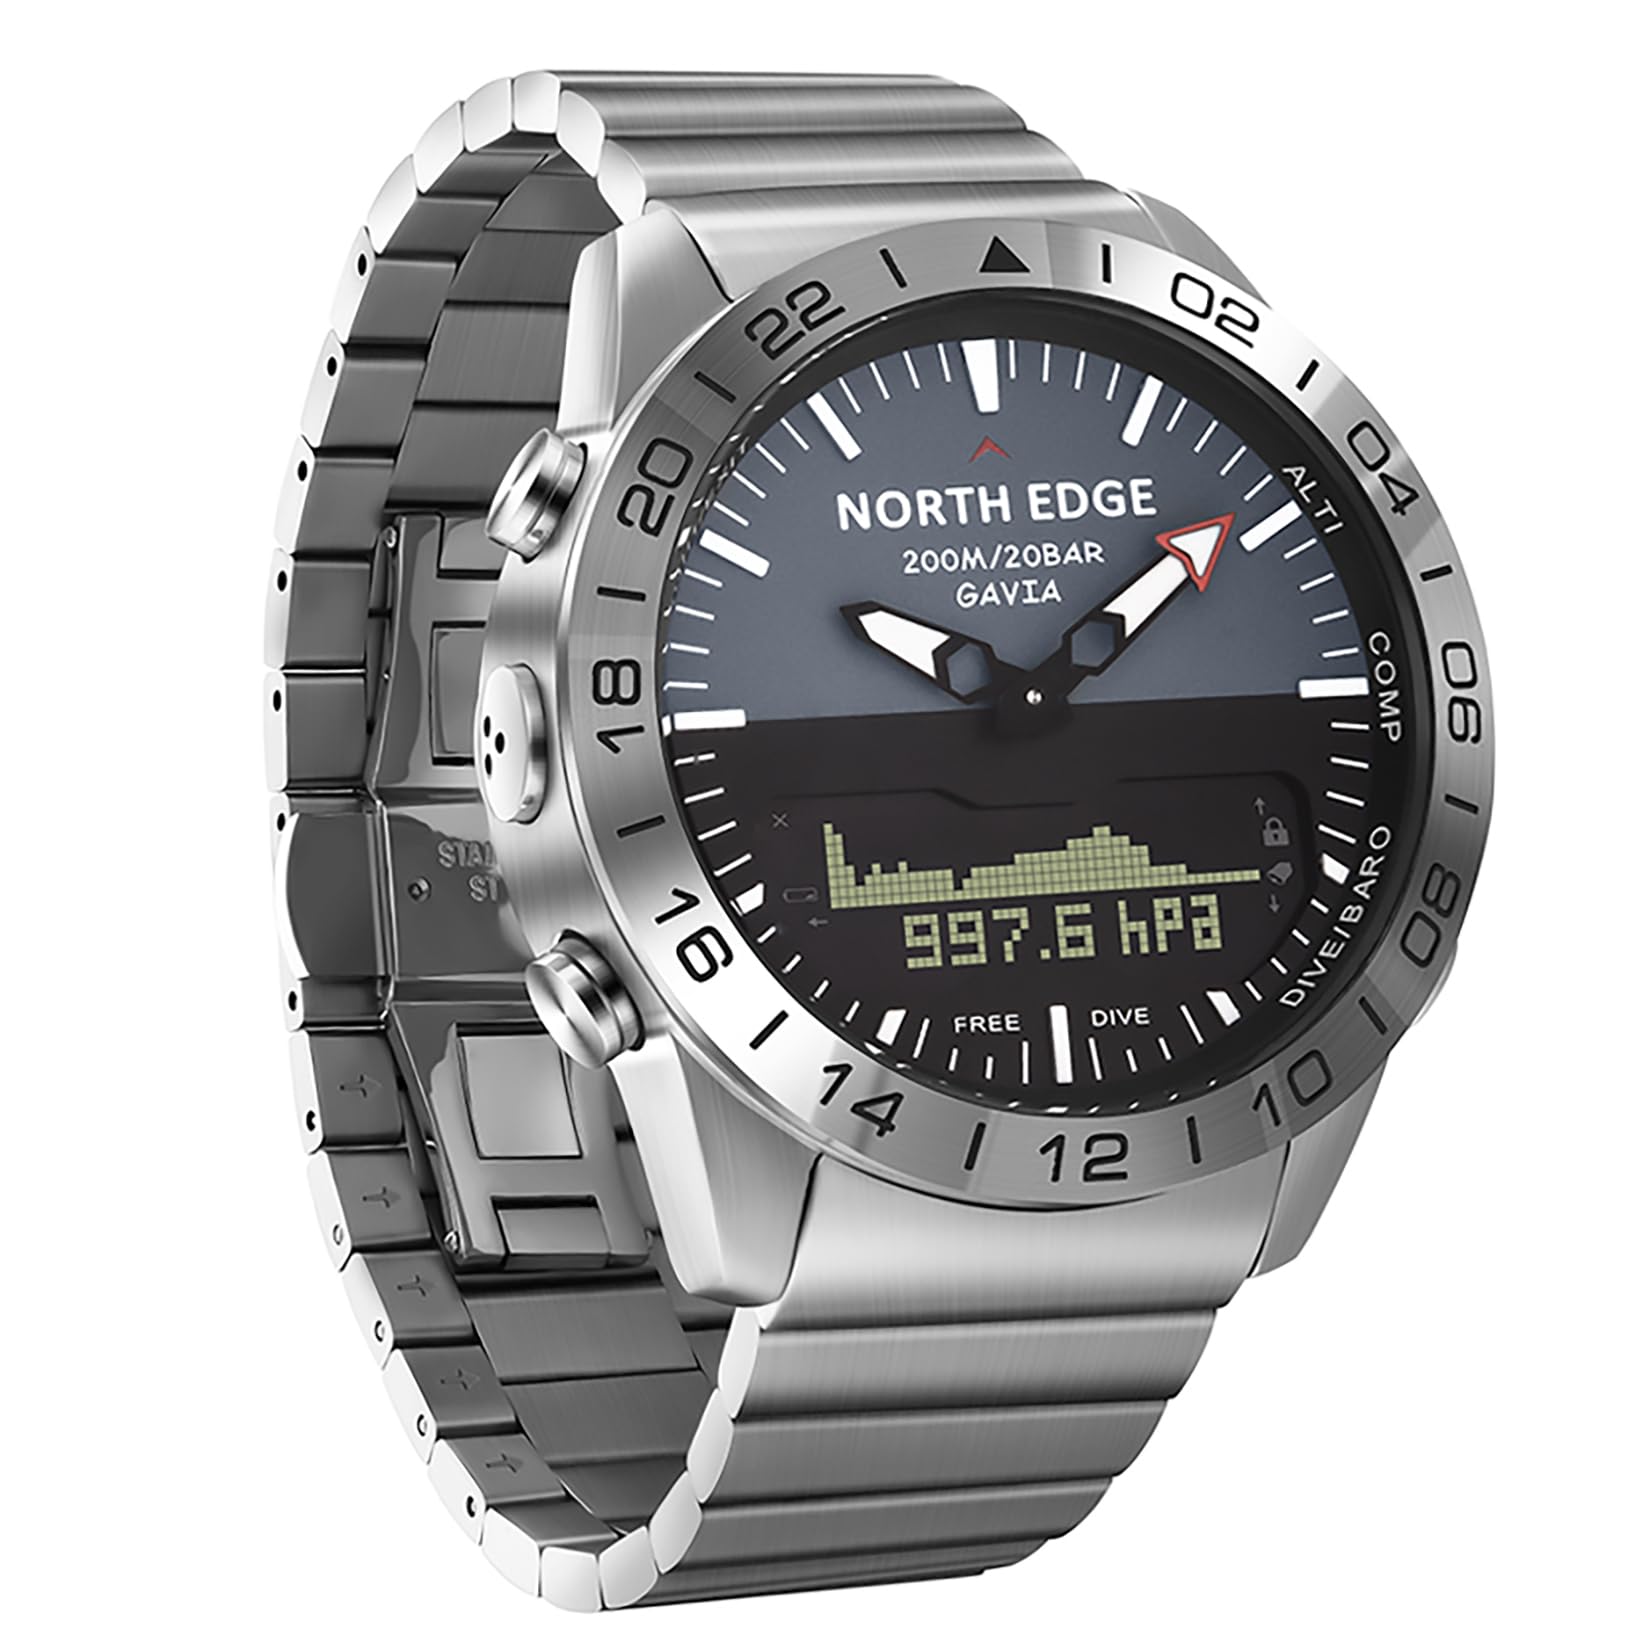 DIDITIME Mens 200m Waterproof Analog-Digital Watch Nylon Band Silver